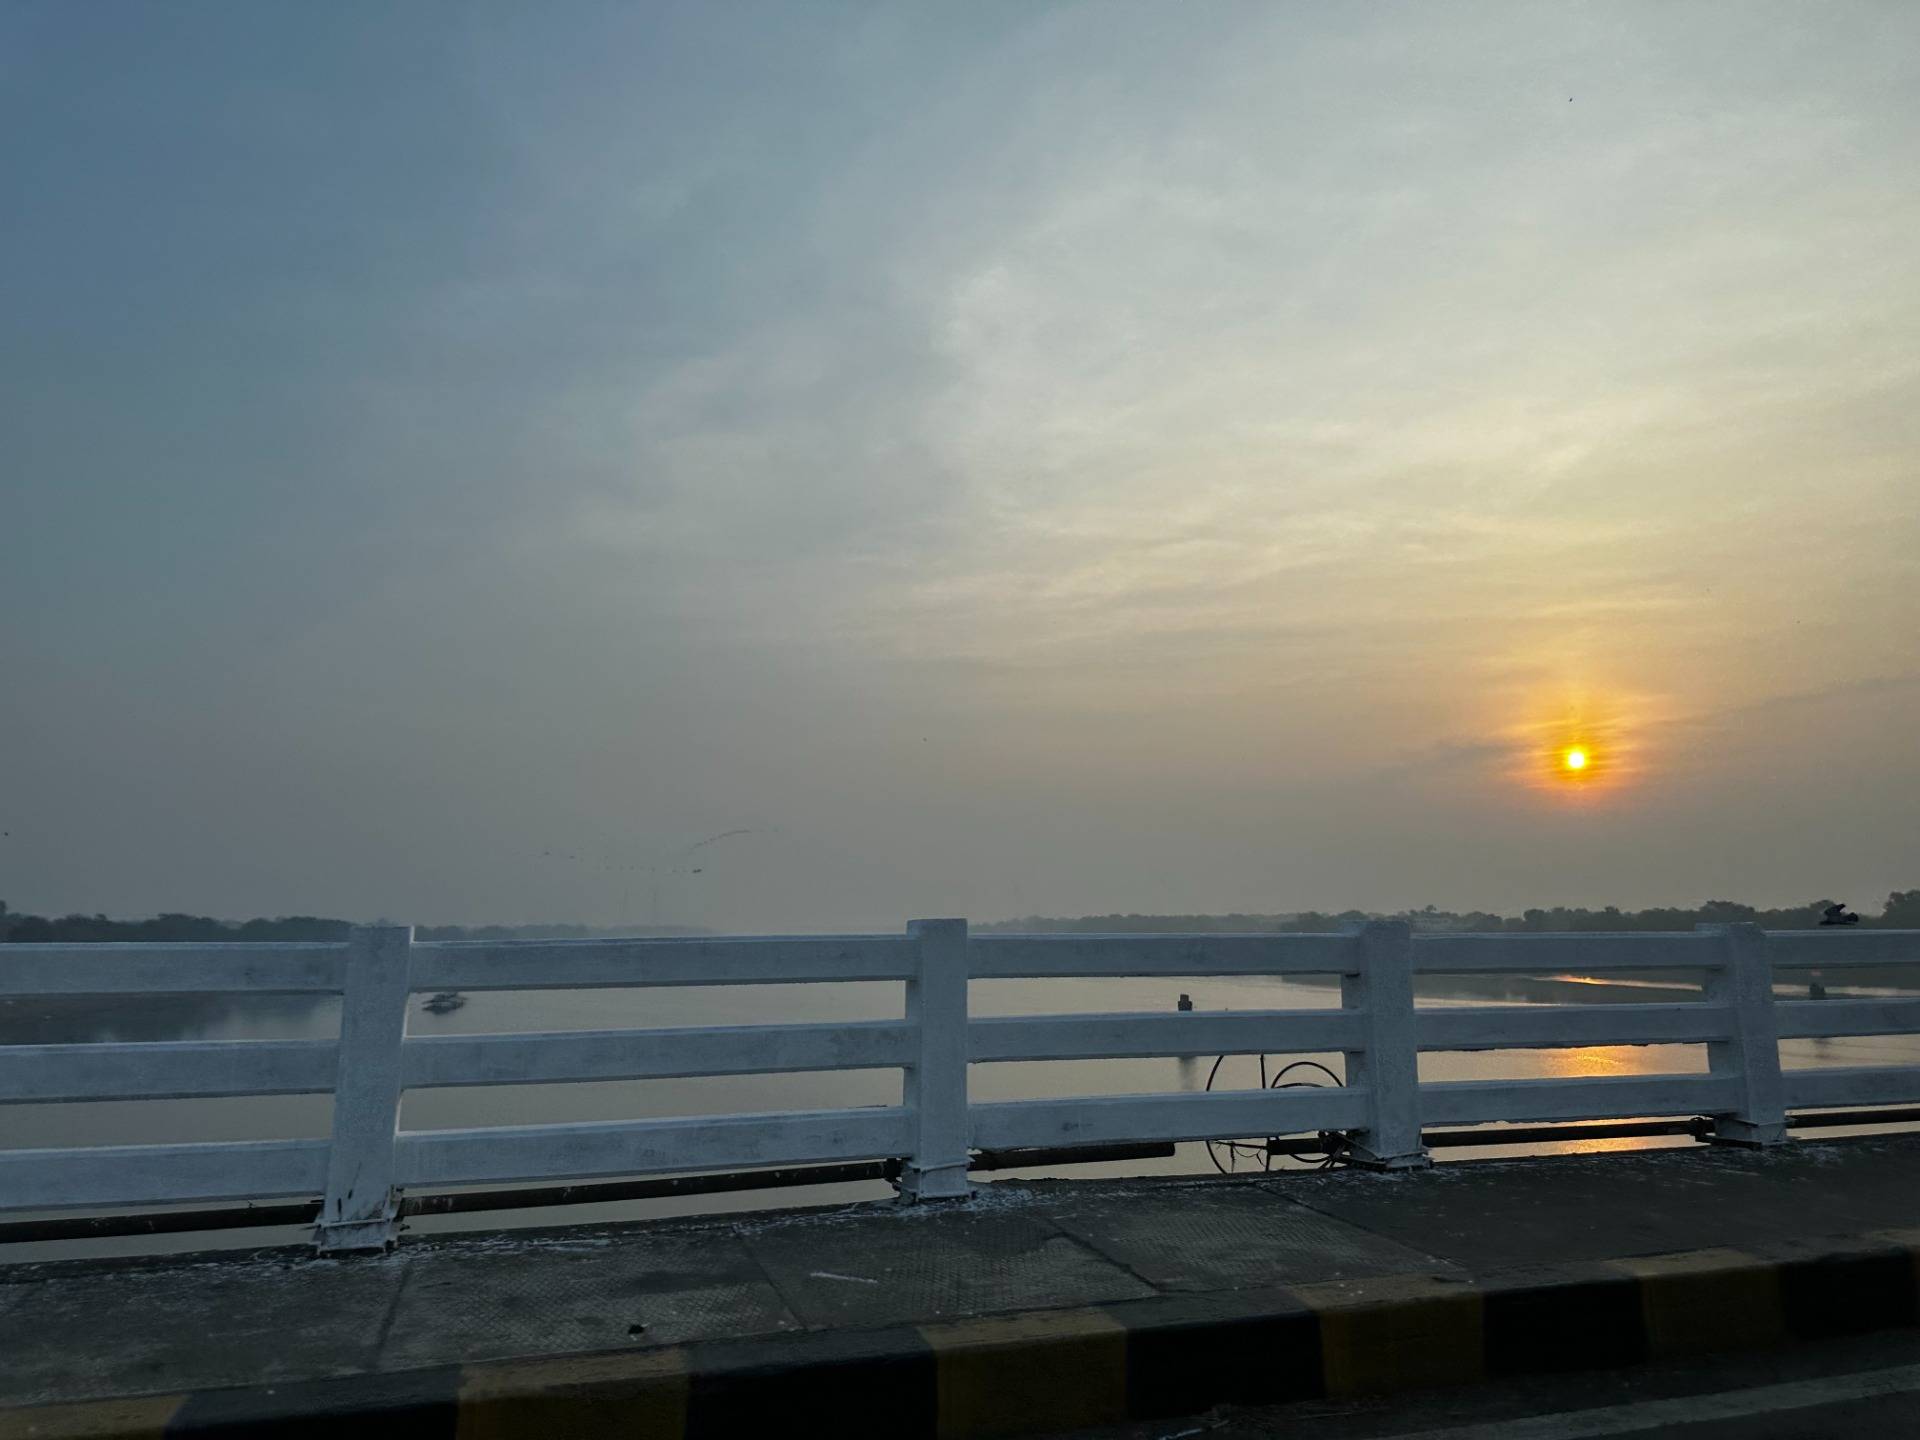 Crossing the Narmada River near Dhamnod, India